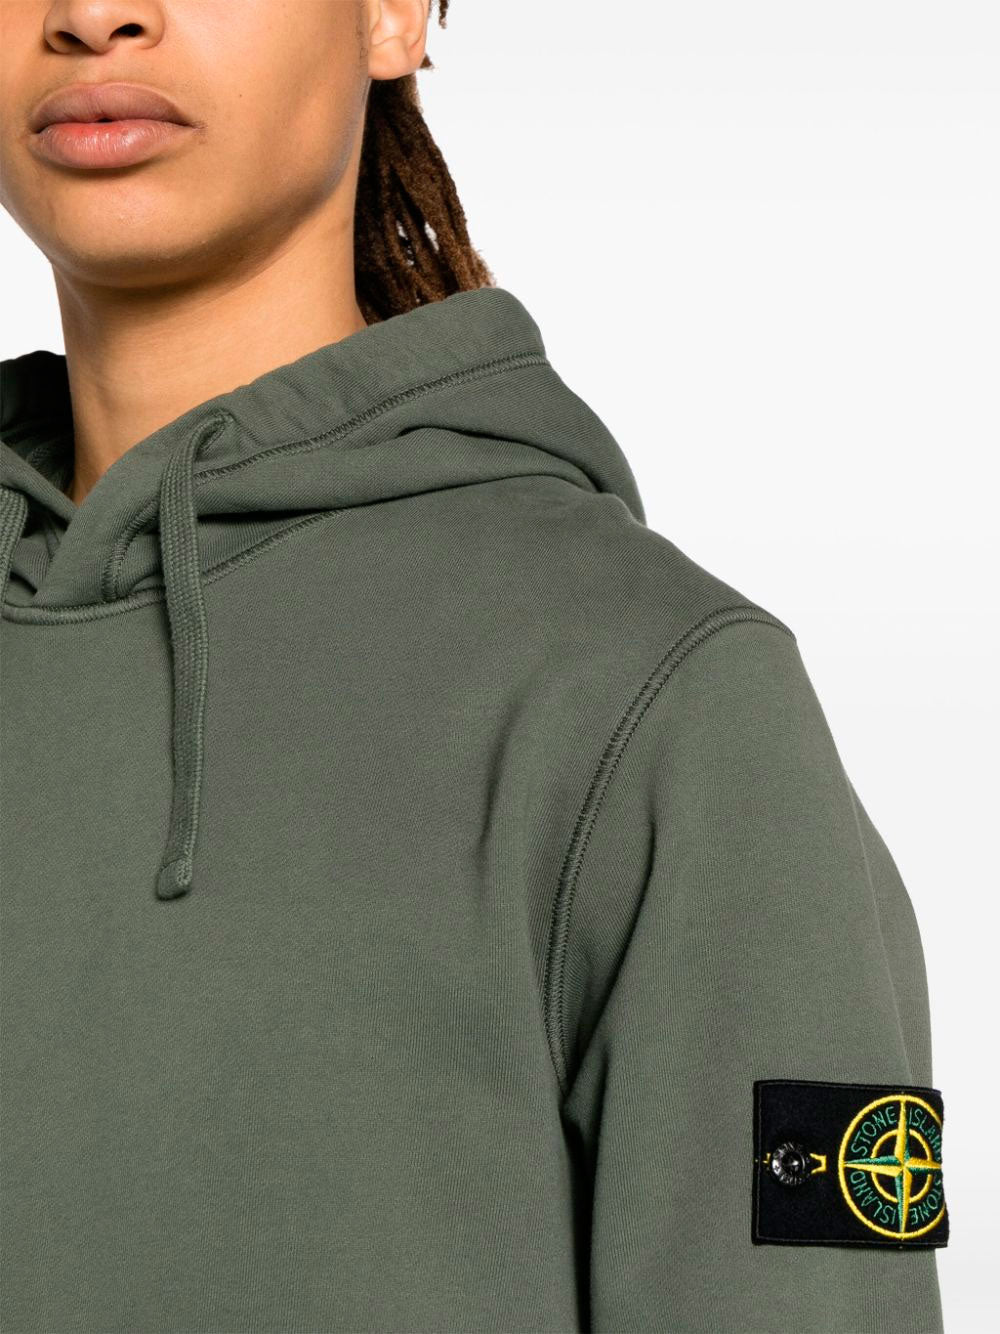 Compass-badge hoodie